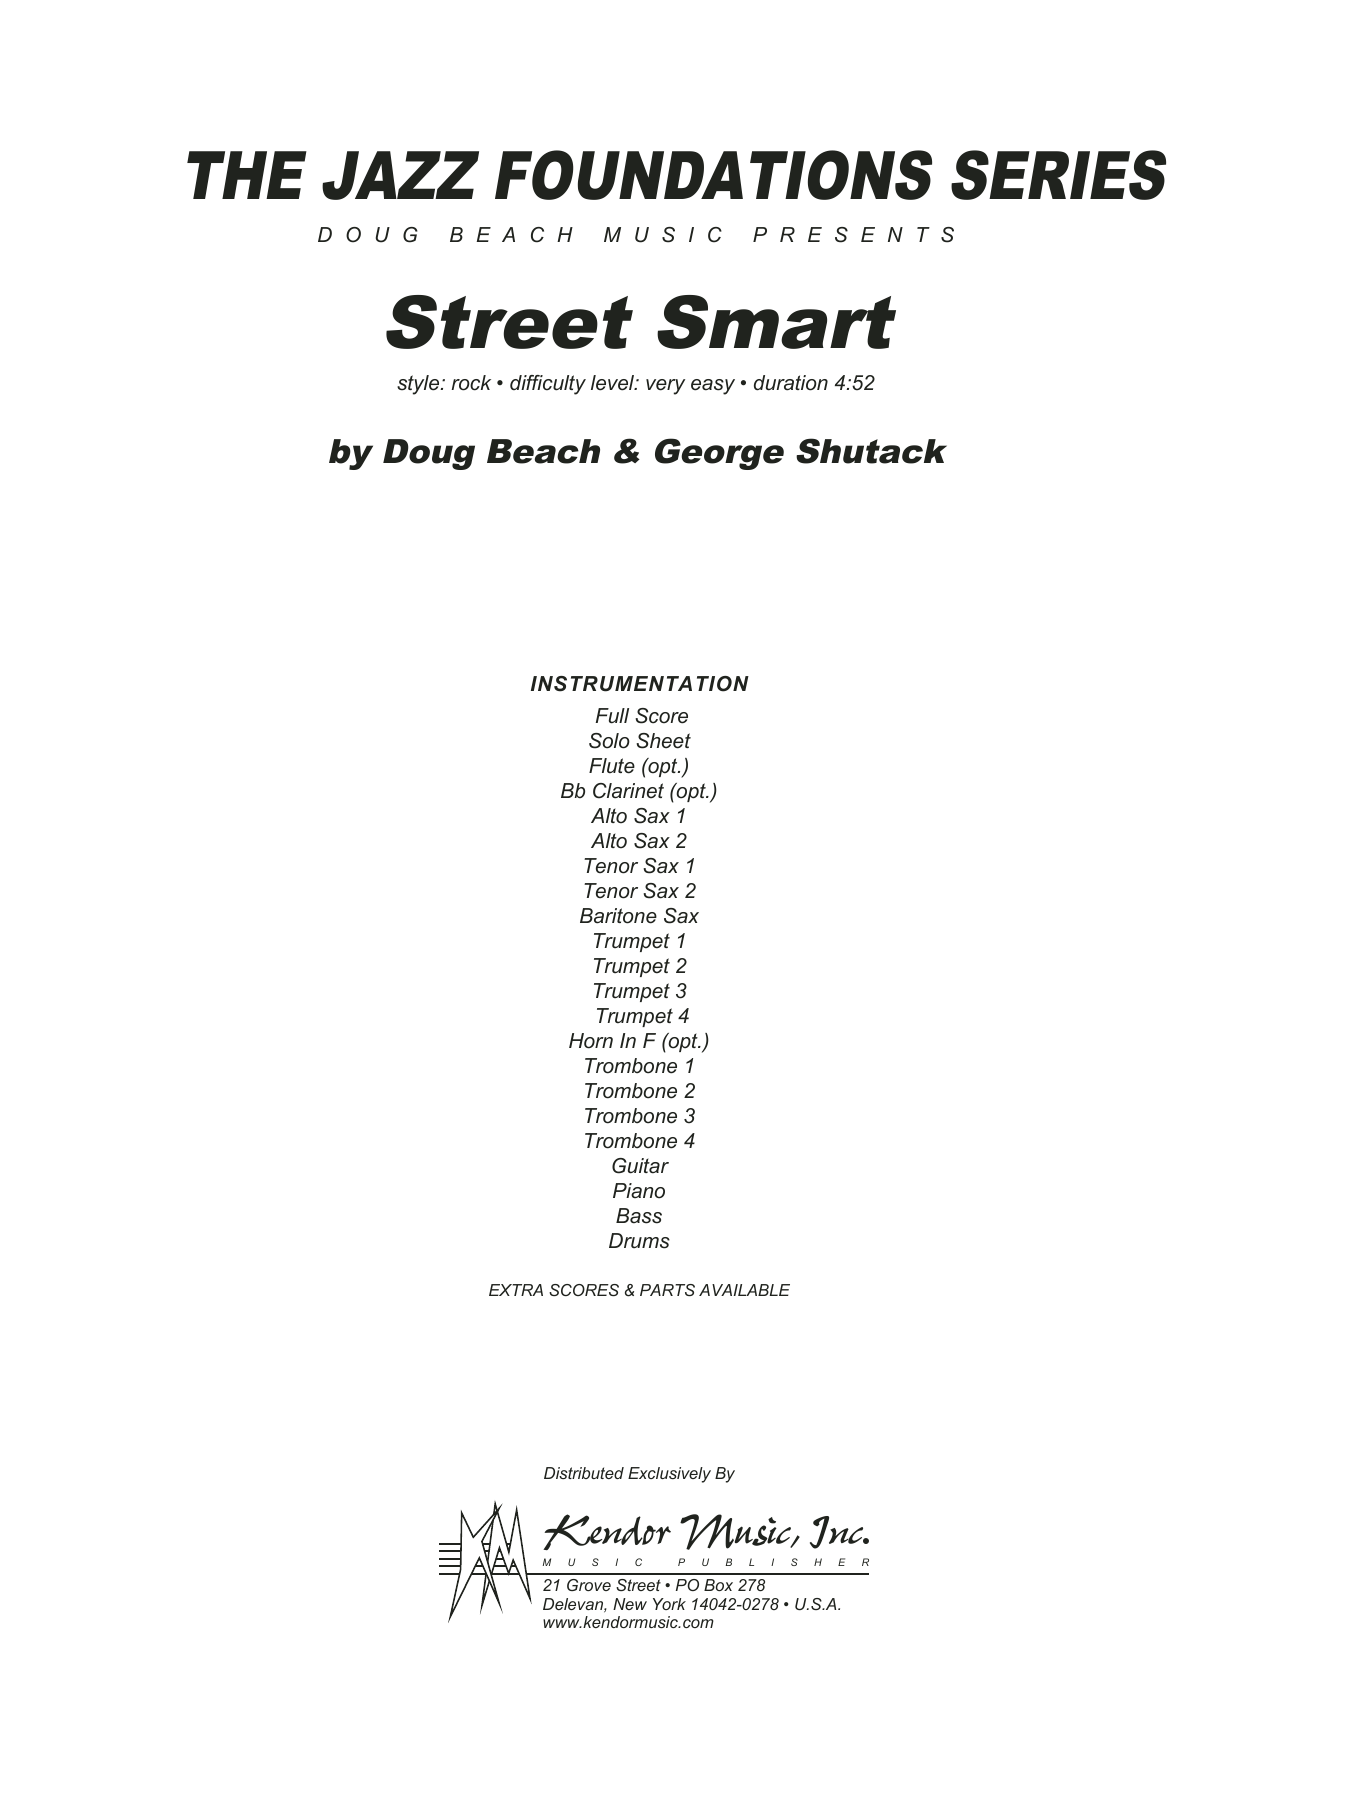 Download Doug Beach & George Shutack Street Smart - Full Score Sheet Music